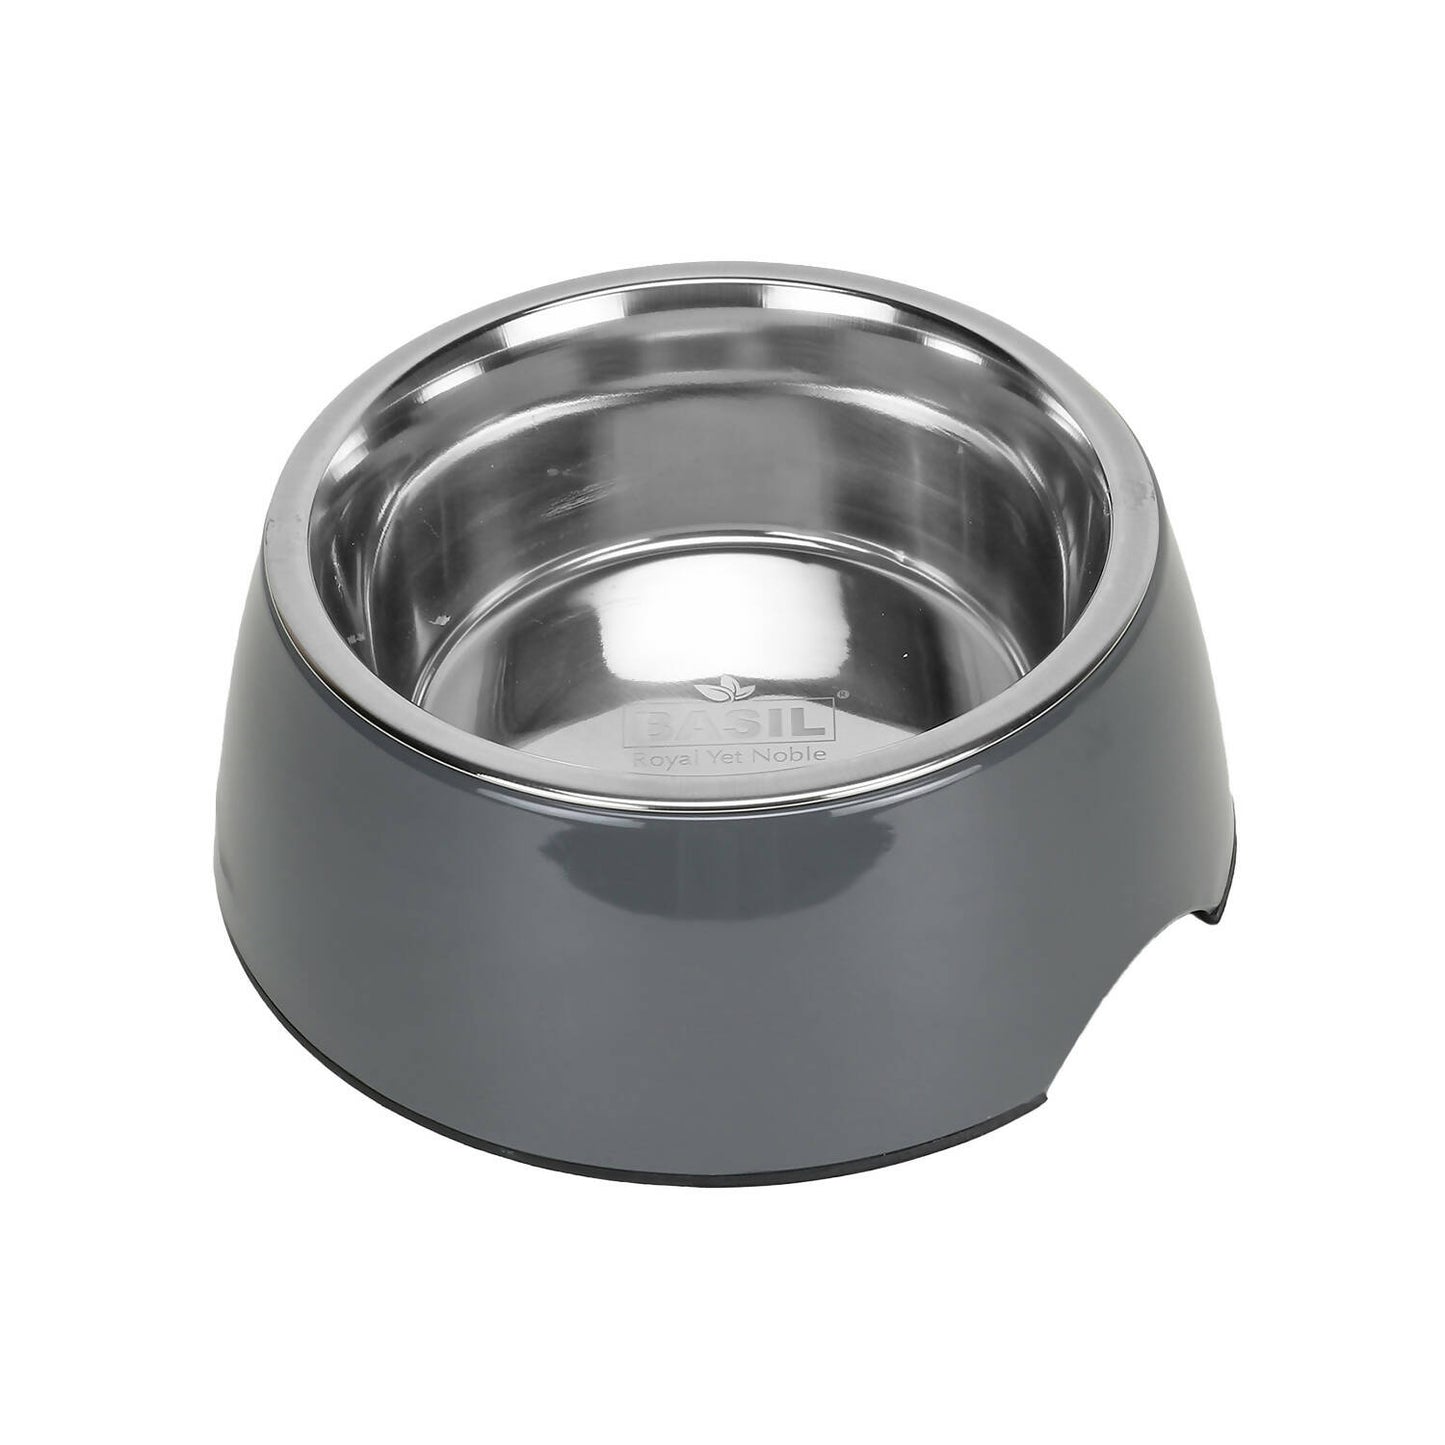 Basil - Melamine Solid Bowl For Dogs